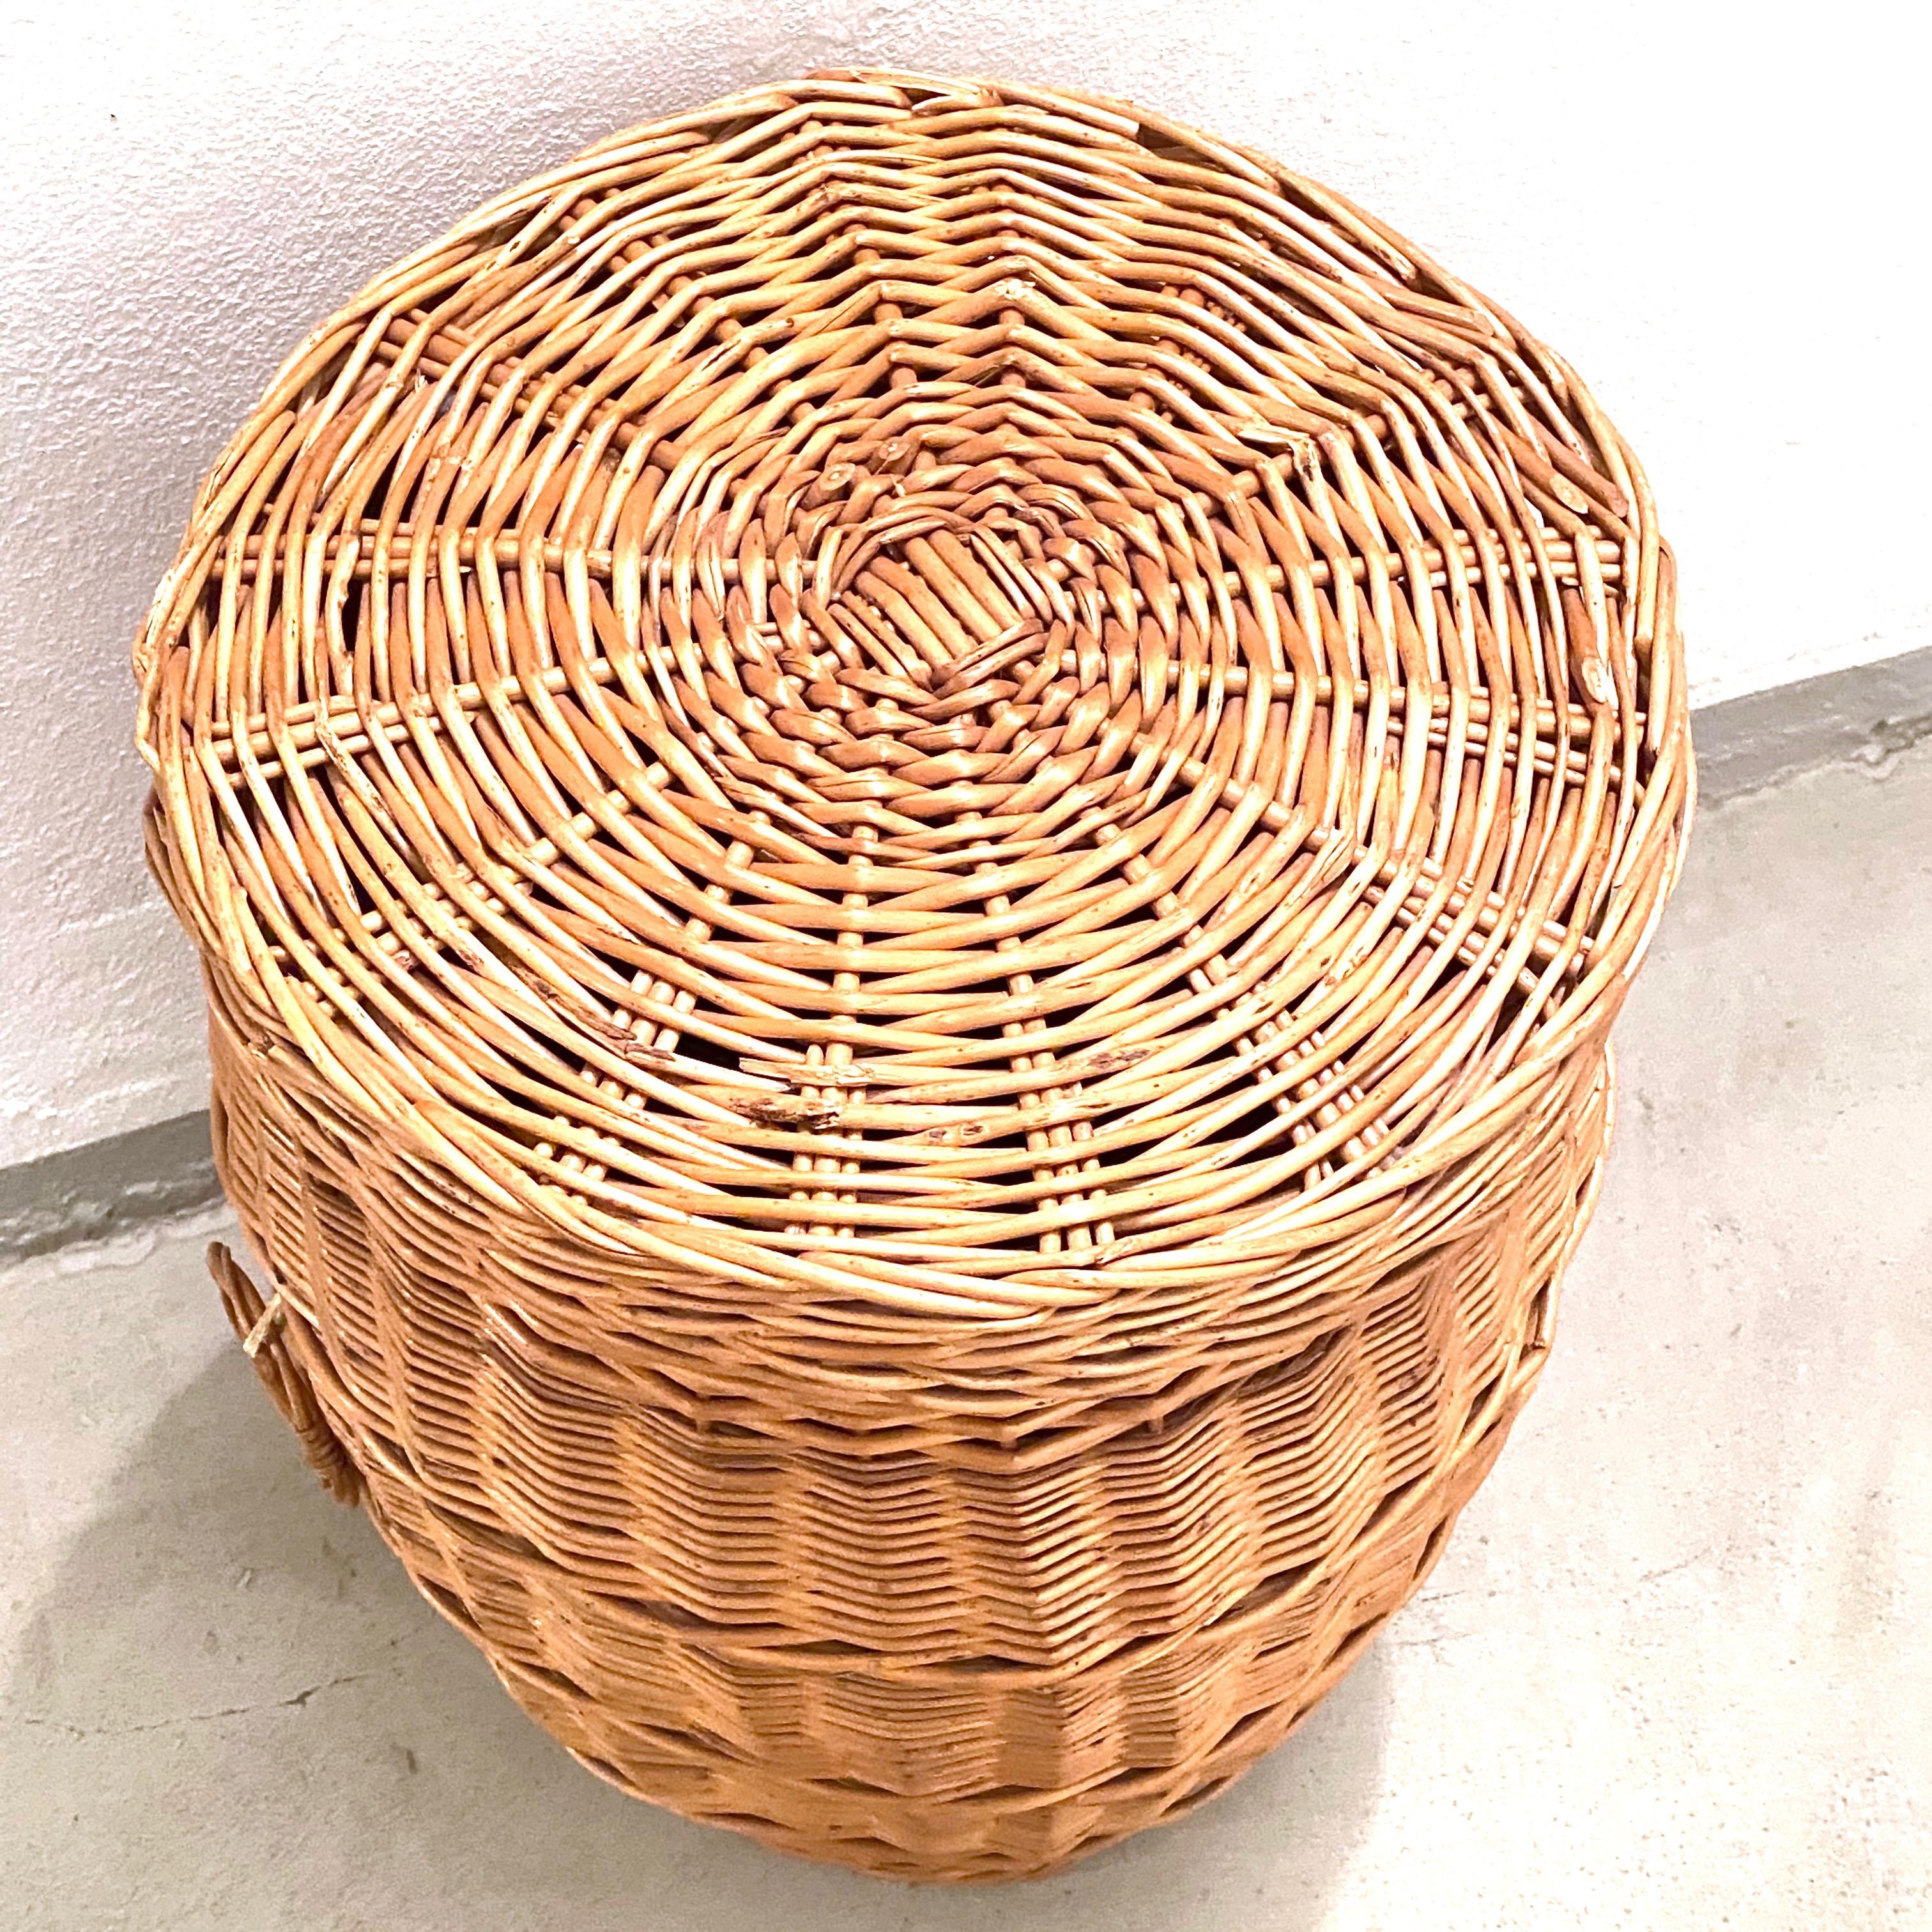 Late 20th Century Vintage Midcentury Wicker Laundry Basket Hamper, 1970s, German